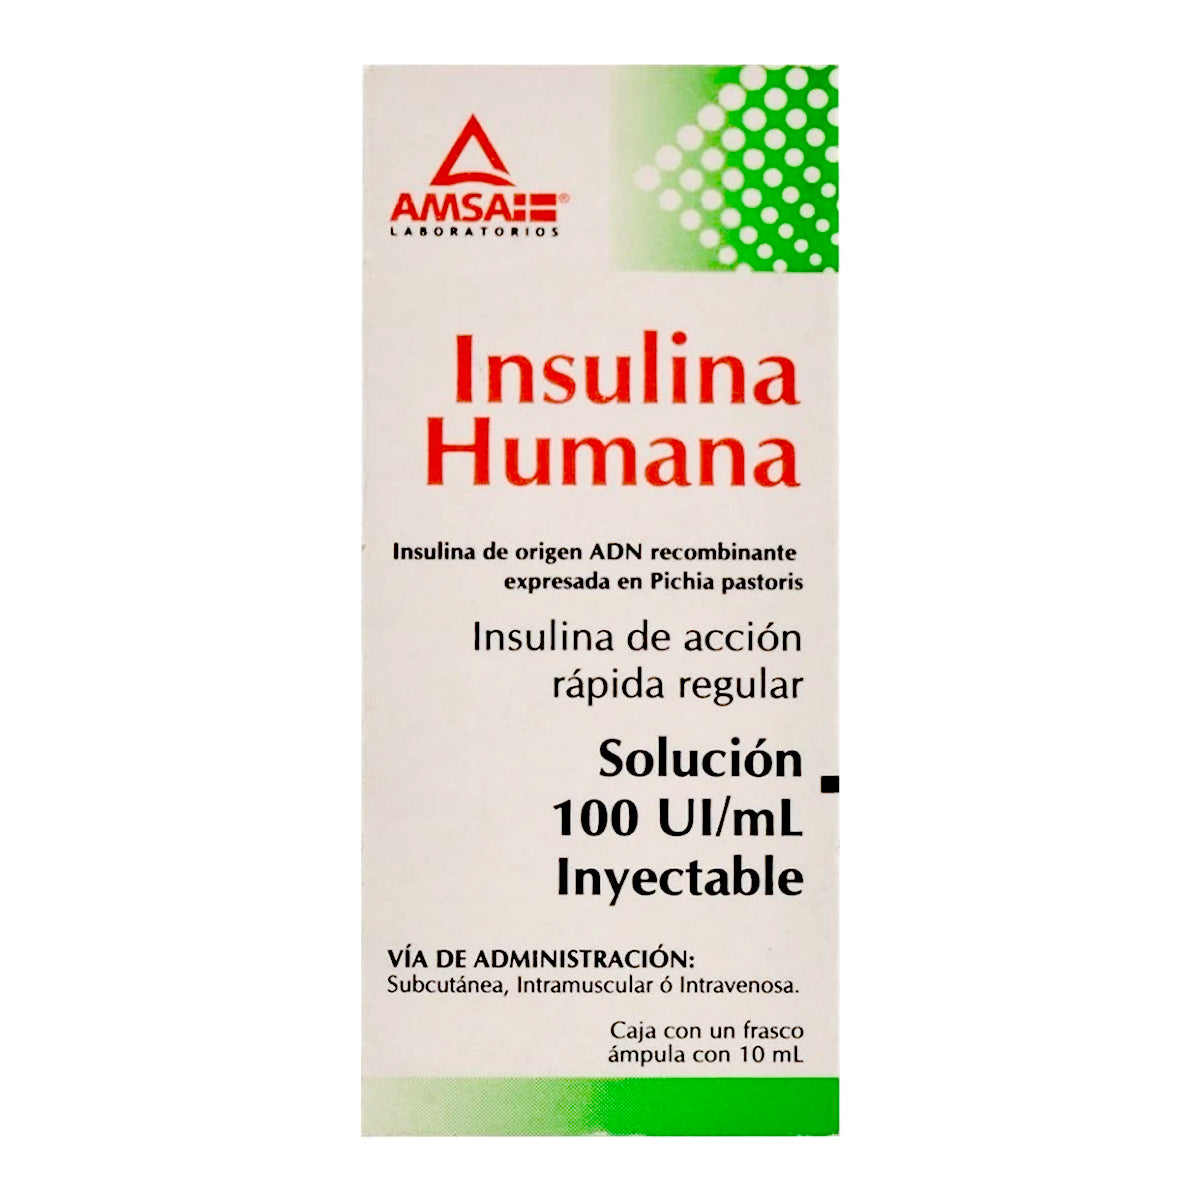 Insulina de acción rápida regular, Solucion 100UI/ml. Insulina Humana de Origen ADN Recombinante, frasco ampula con 10 ml.